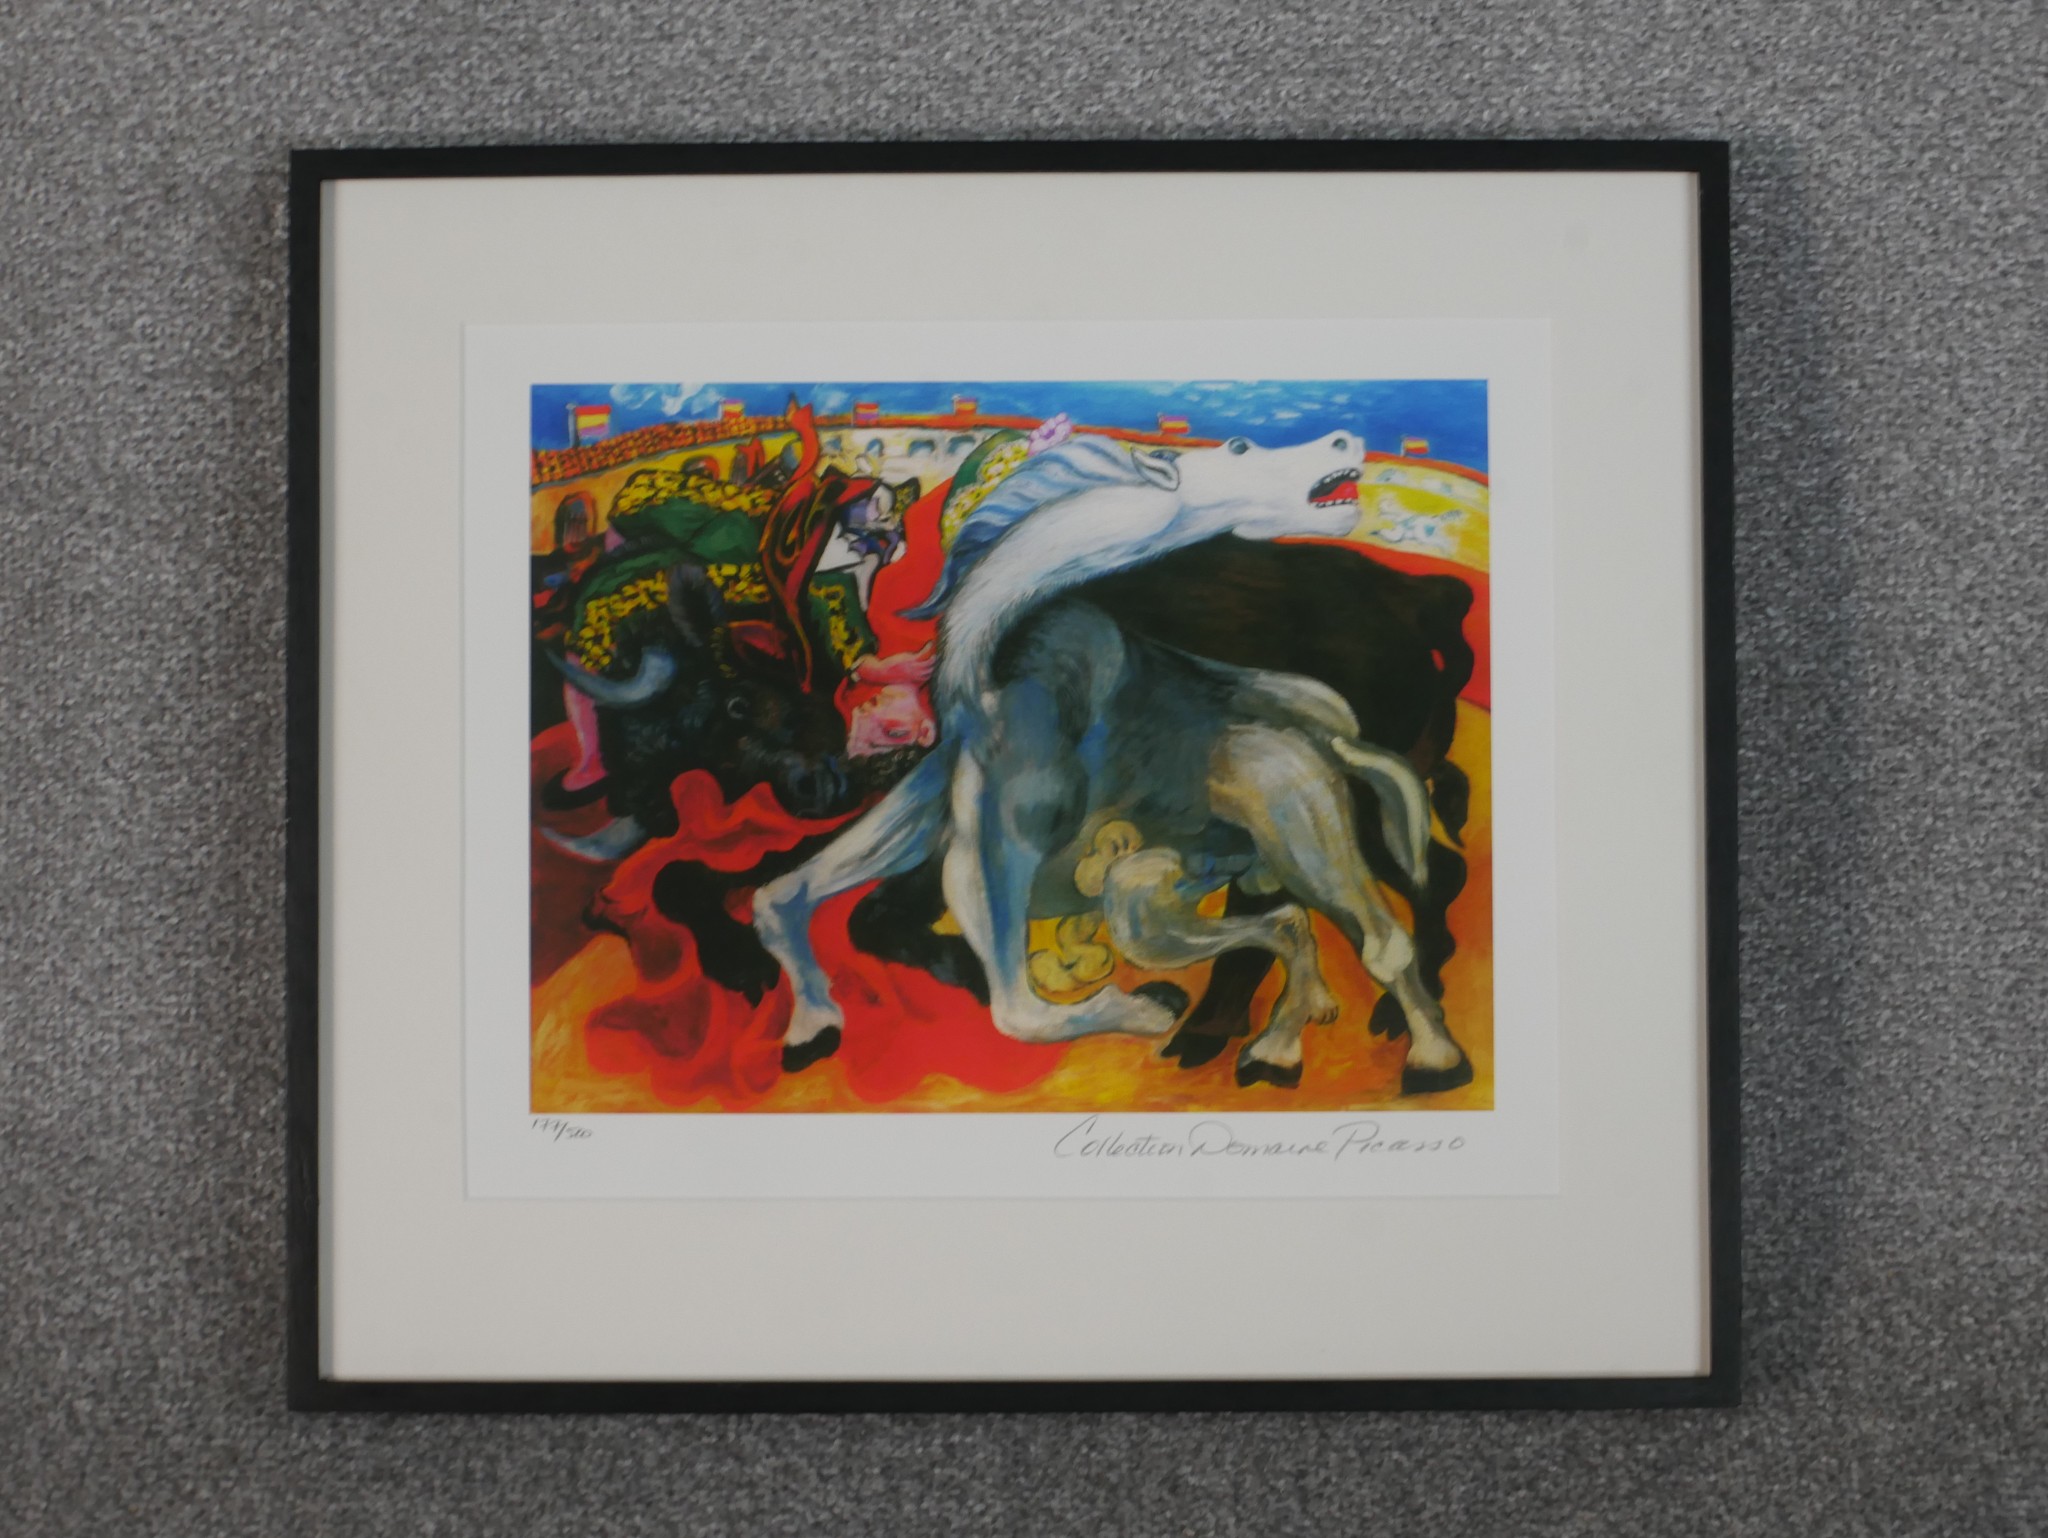 After Pablo Picasso, Corrida: la mort du torero (Corrida: Death of the Toreador), 1979-82, Giclée - Image 2 of 6